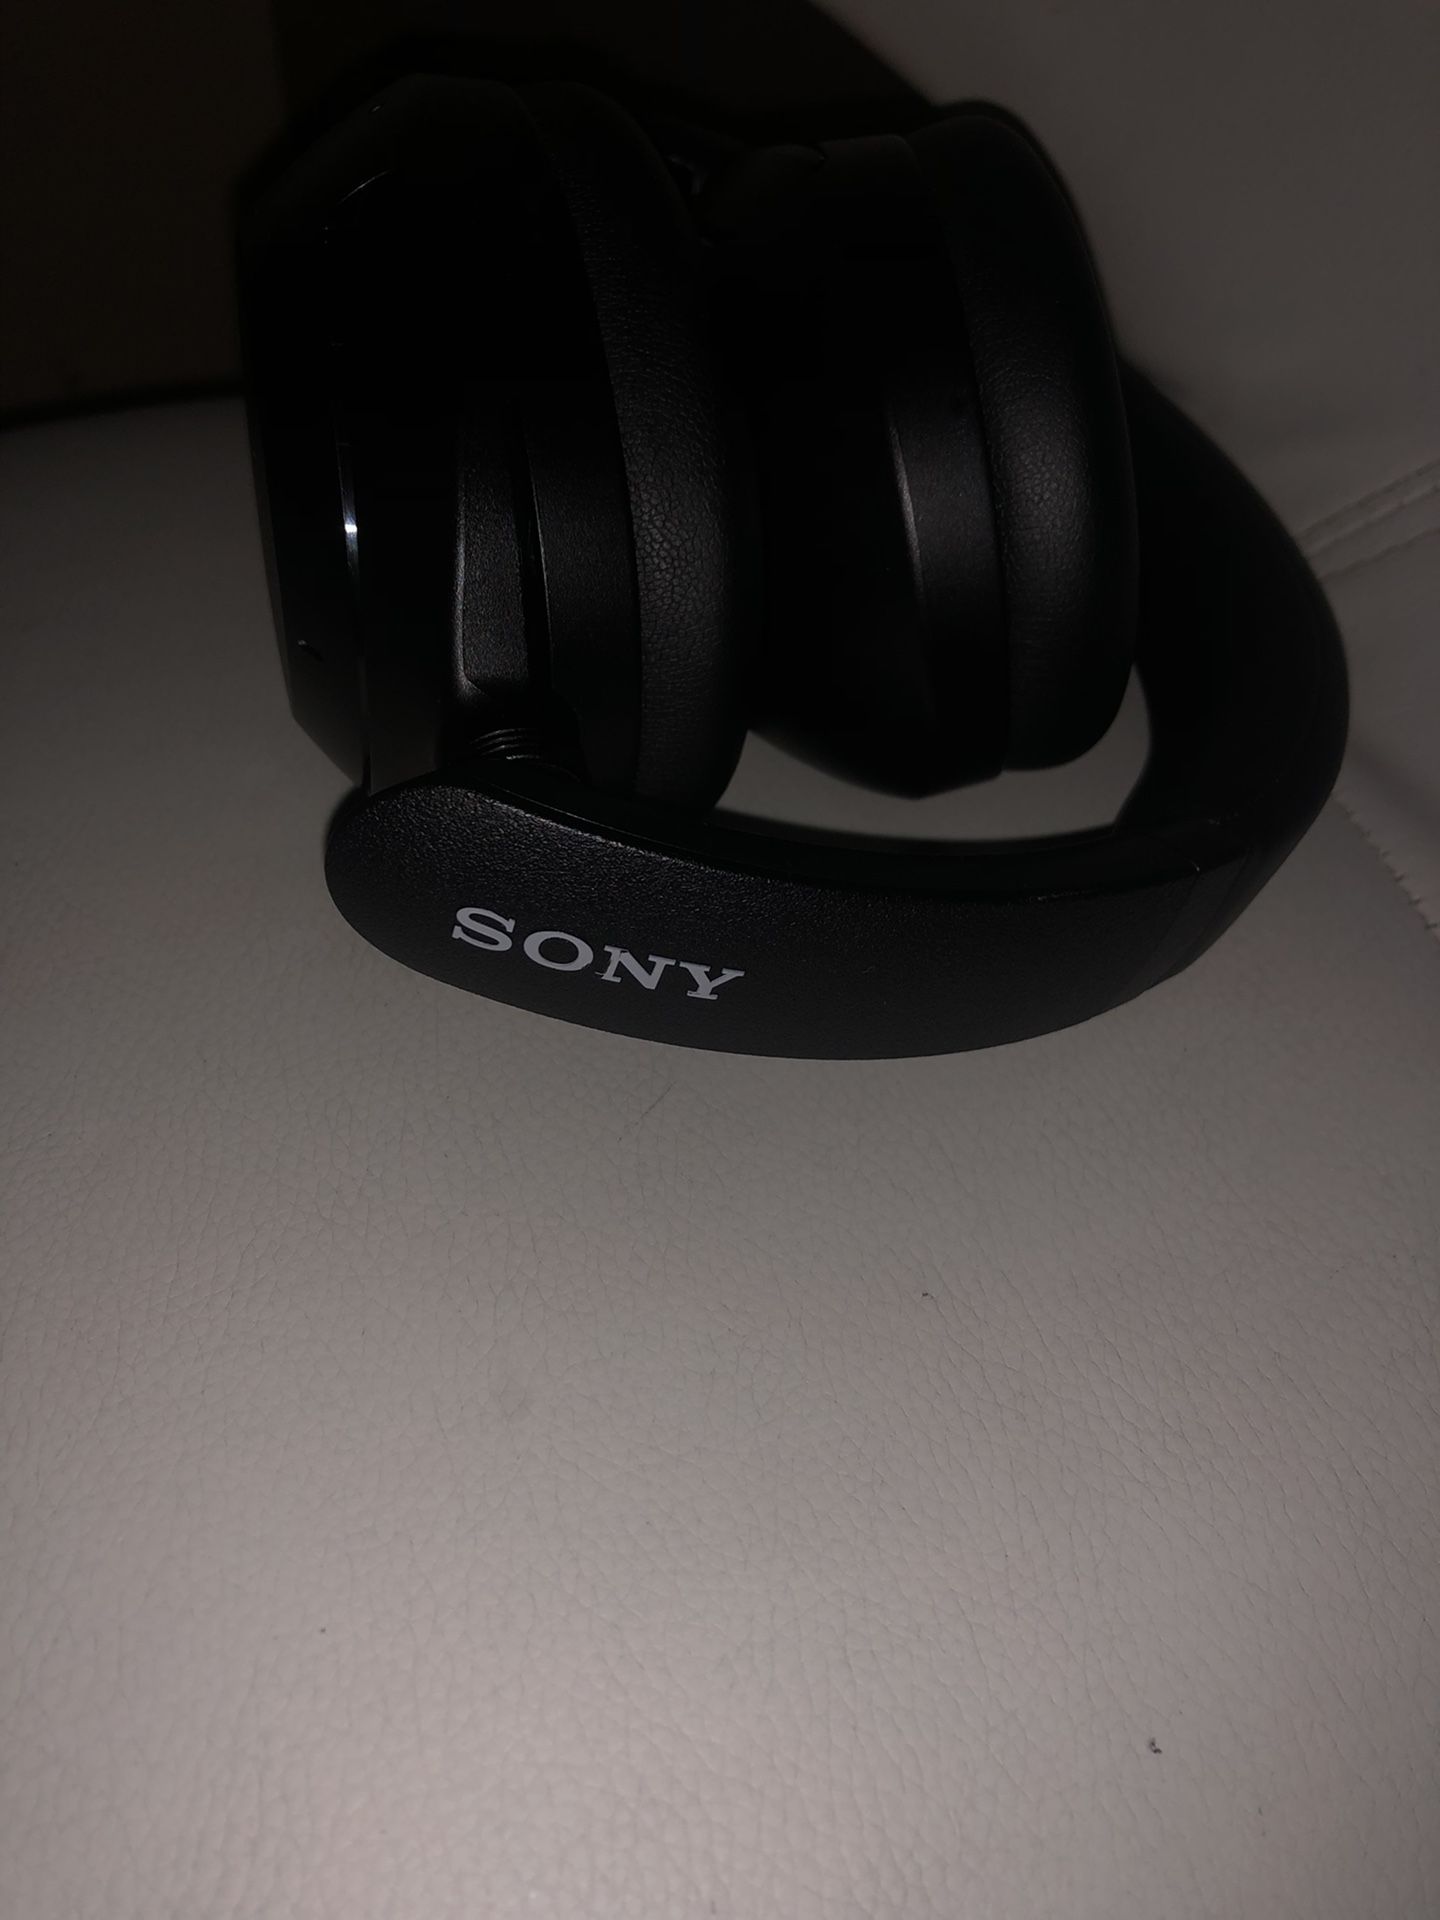 Sony Gaming Headset 